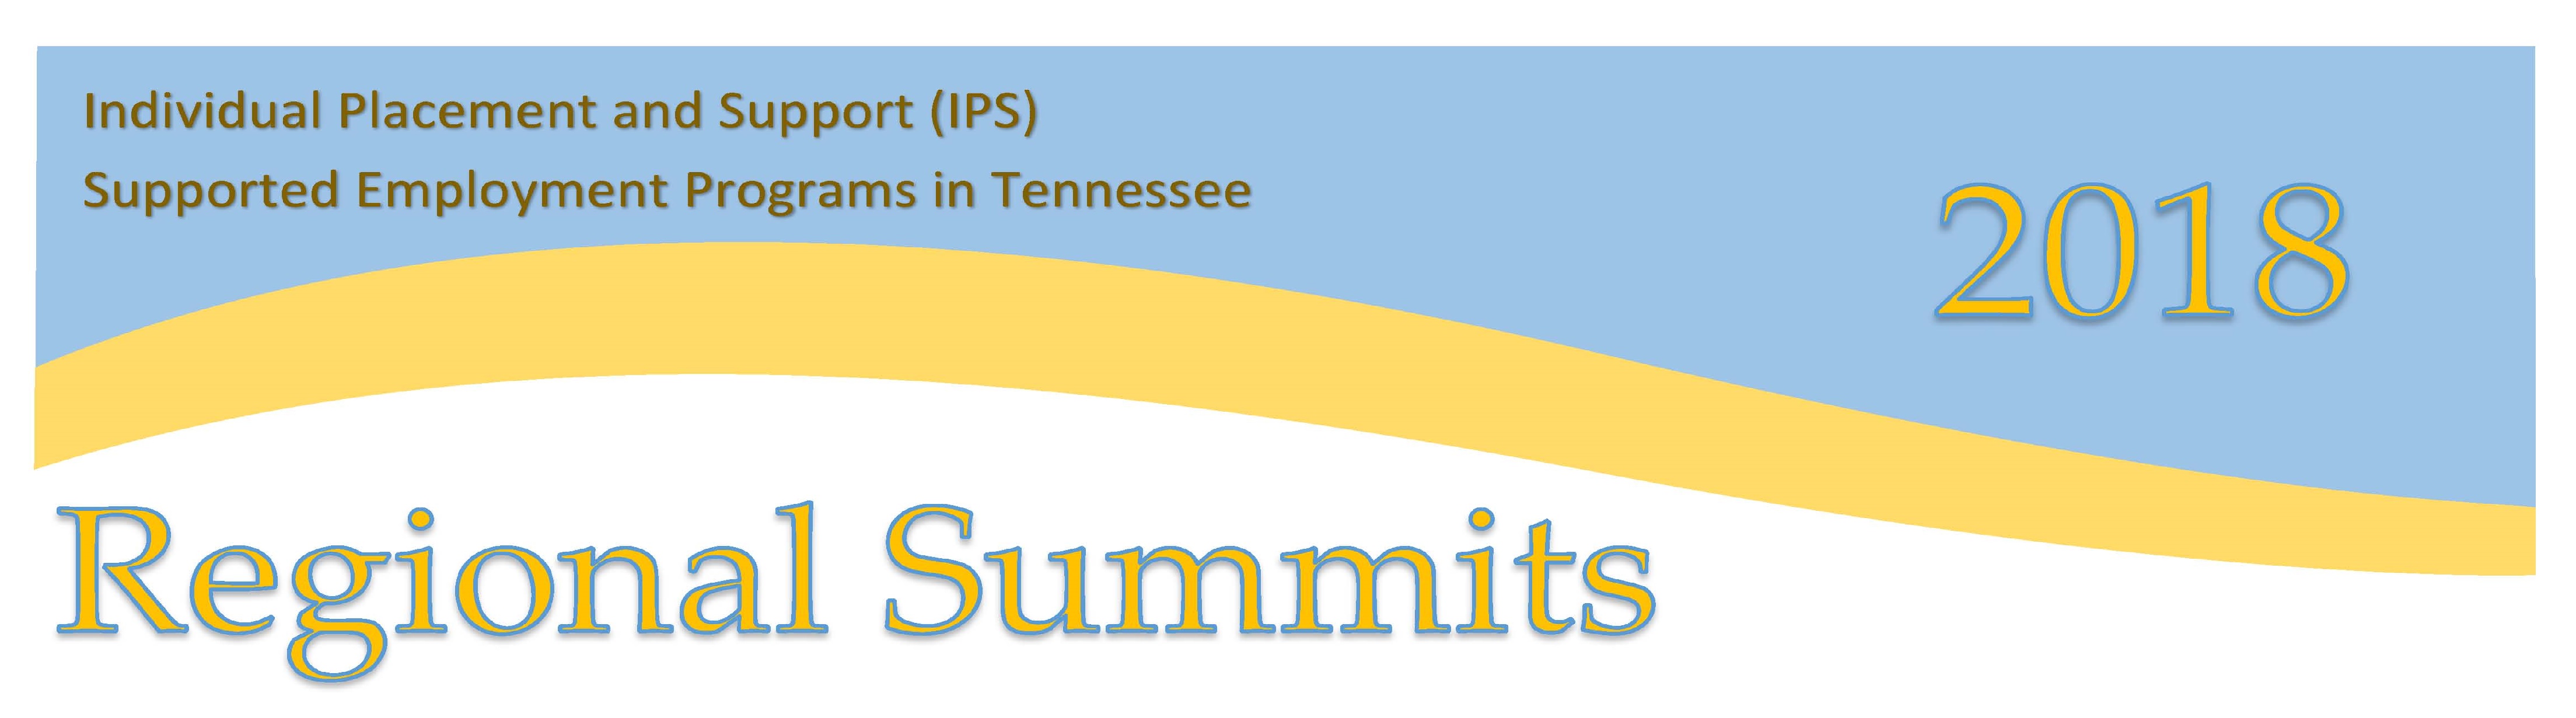 IPS Regional Summit JPG